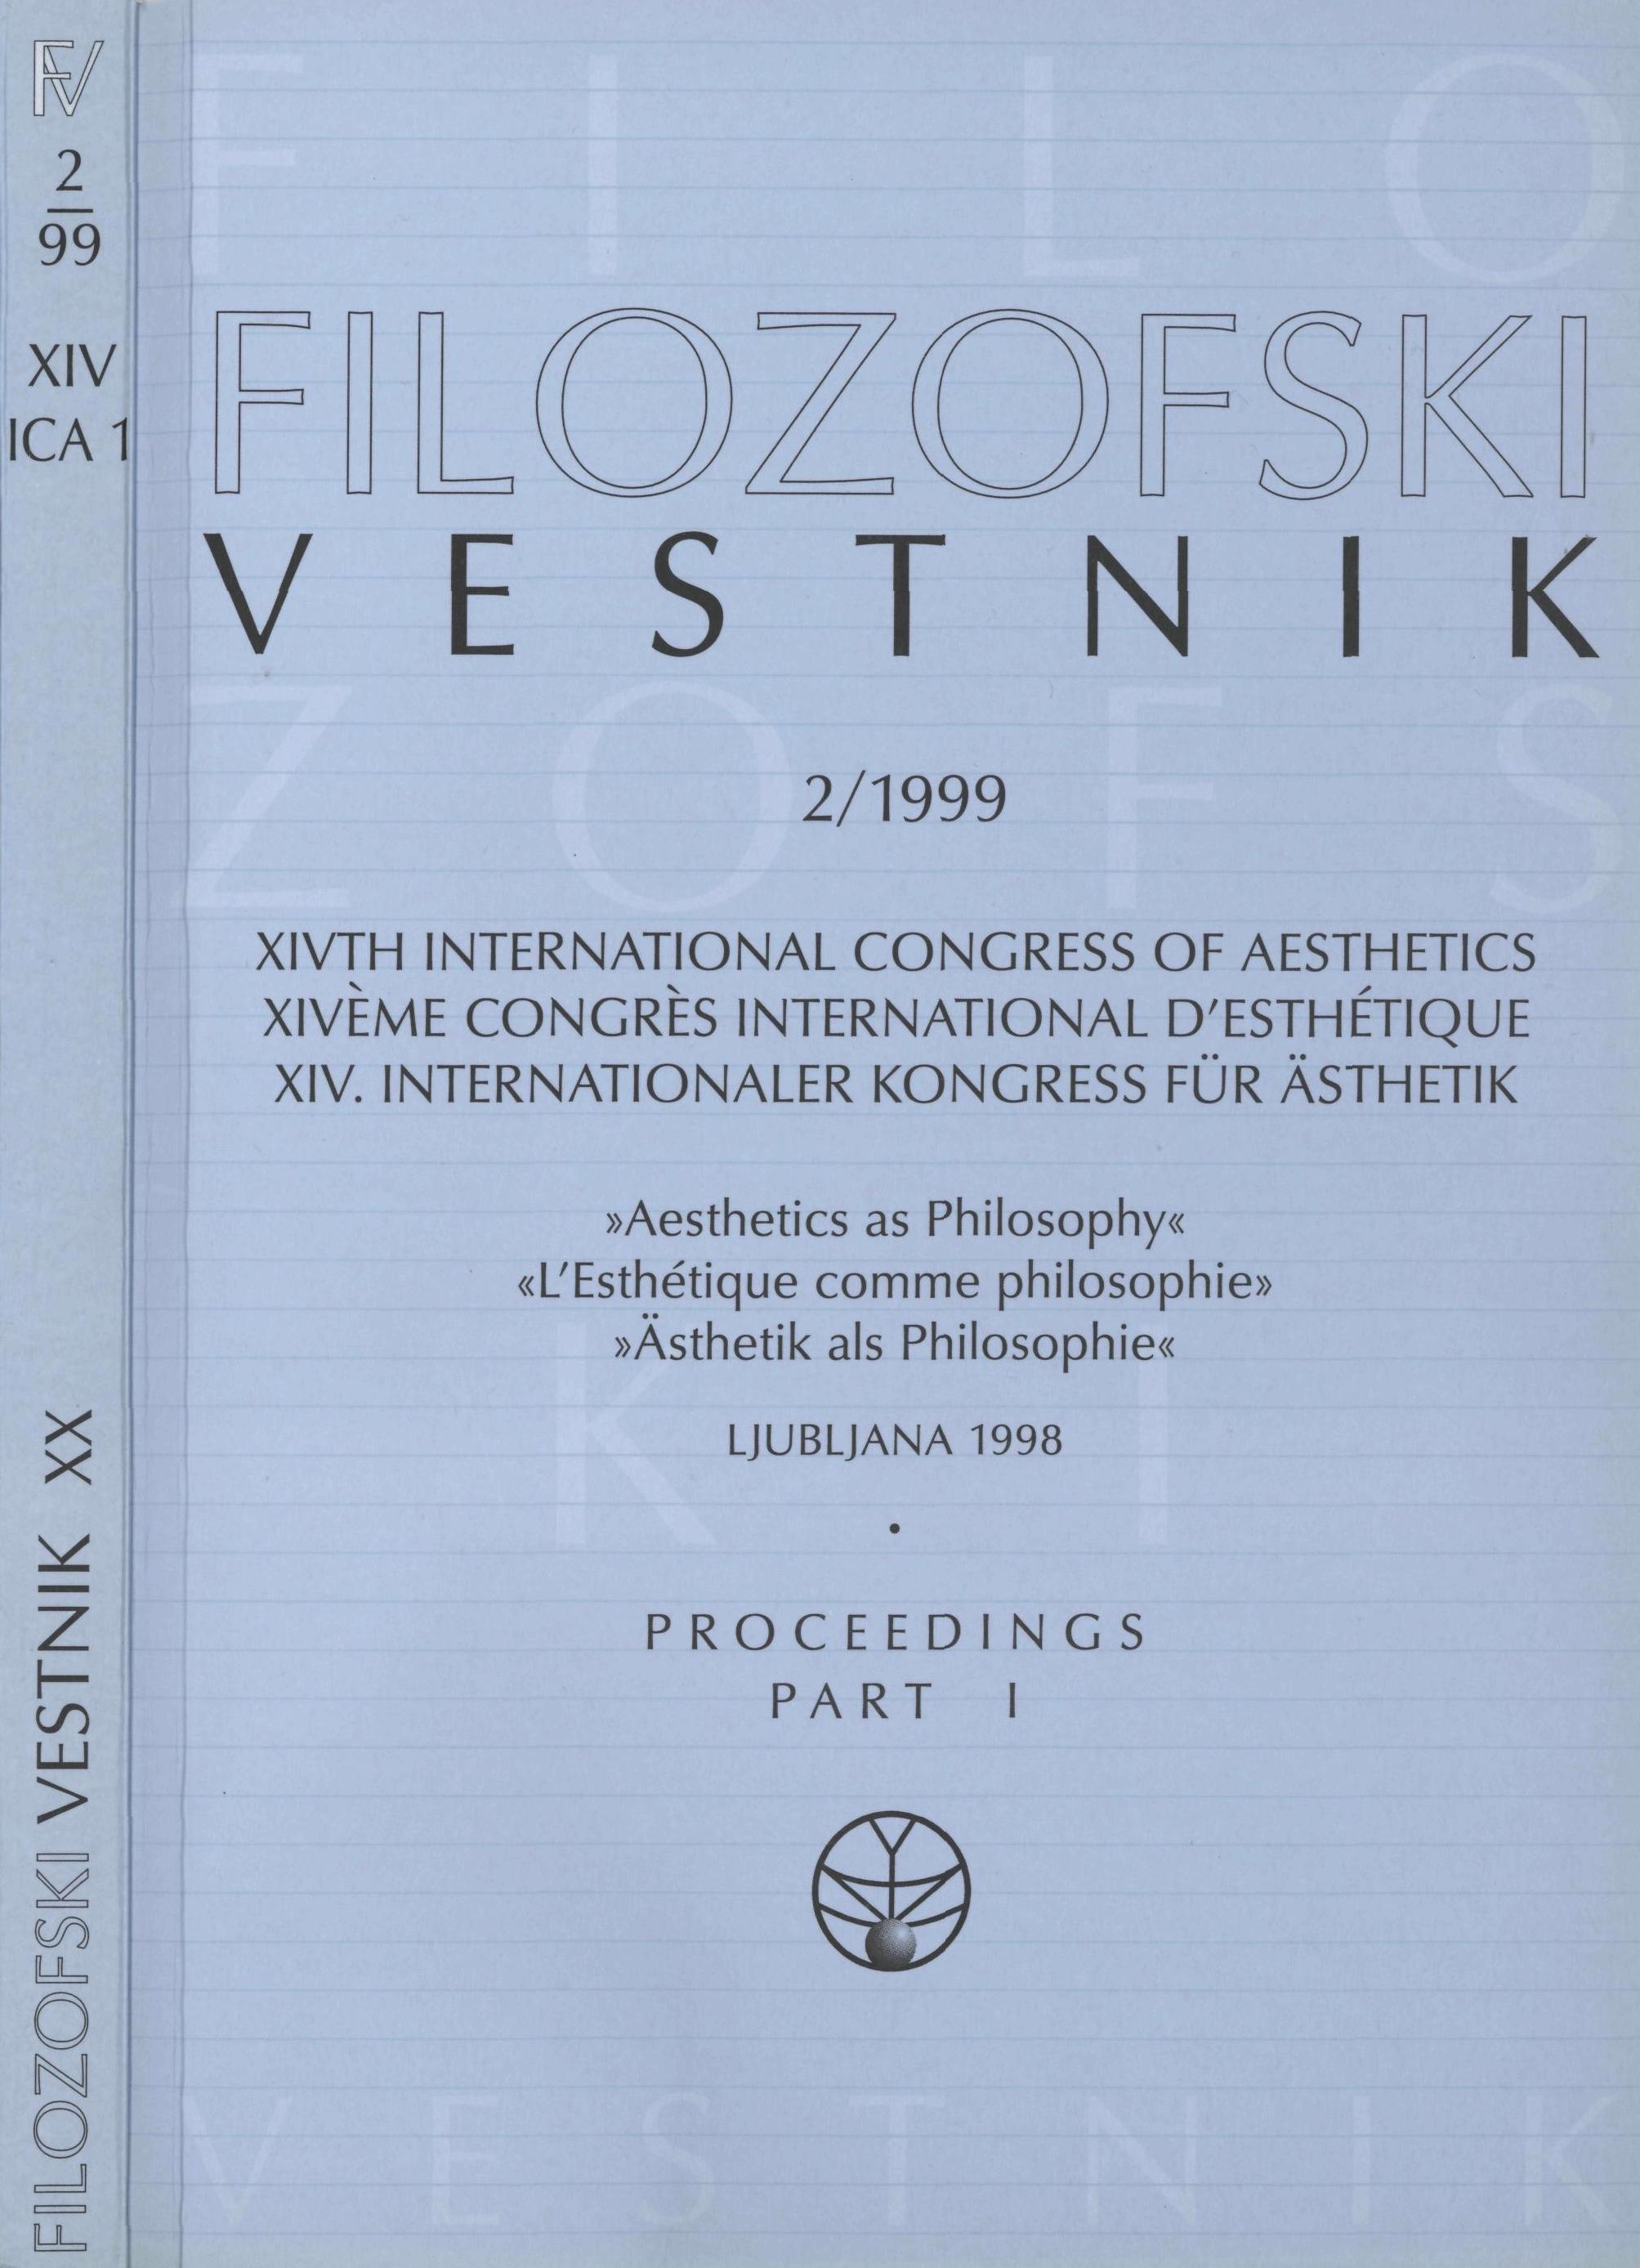 					Poglej Letn. 20 Št. 2 (1999): XIVth International Congress of Aesthetics, "Aesthetics as Philosophy", Proceedings, Part I
				